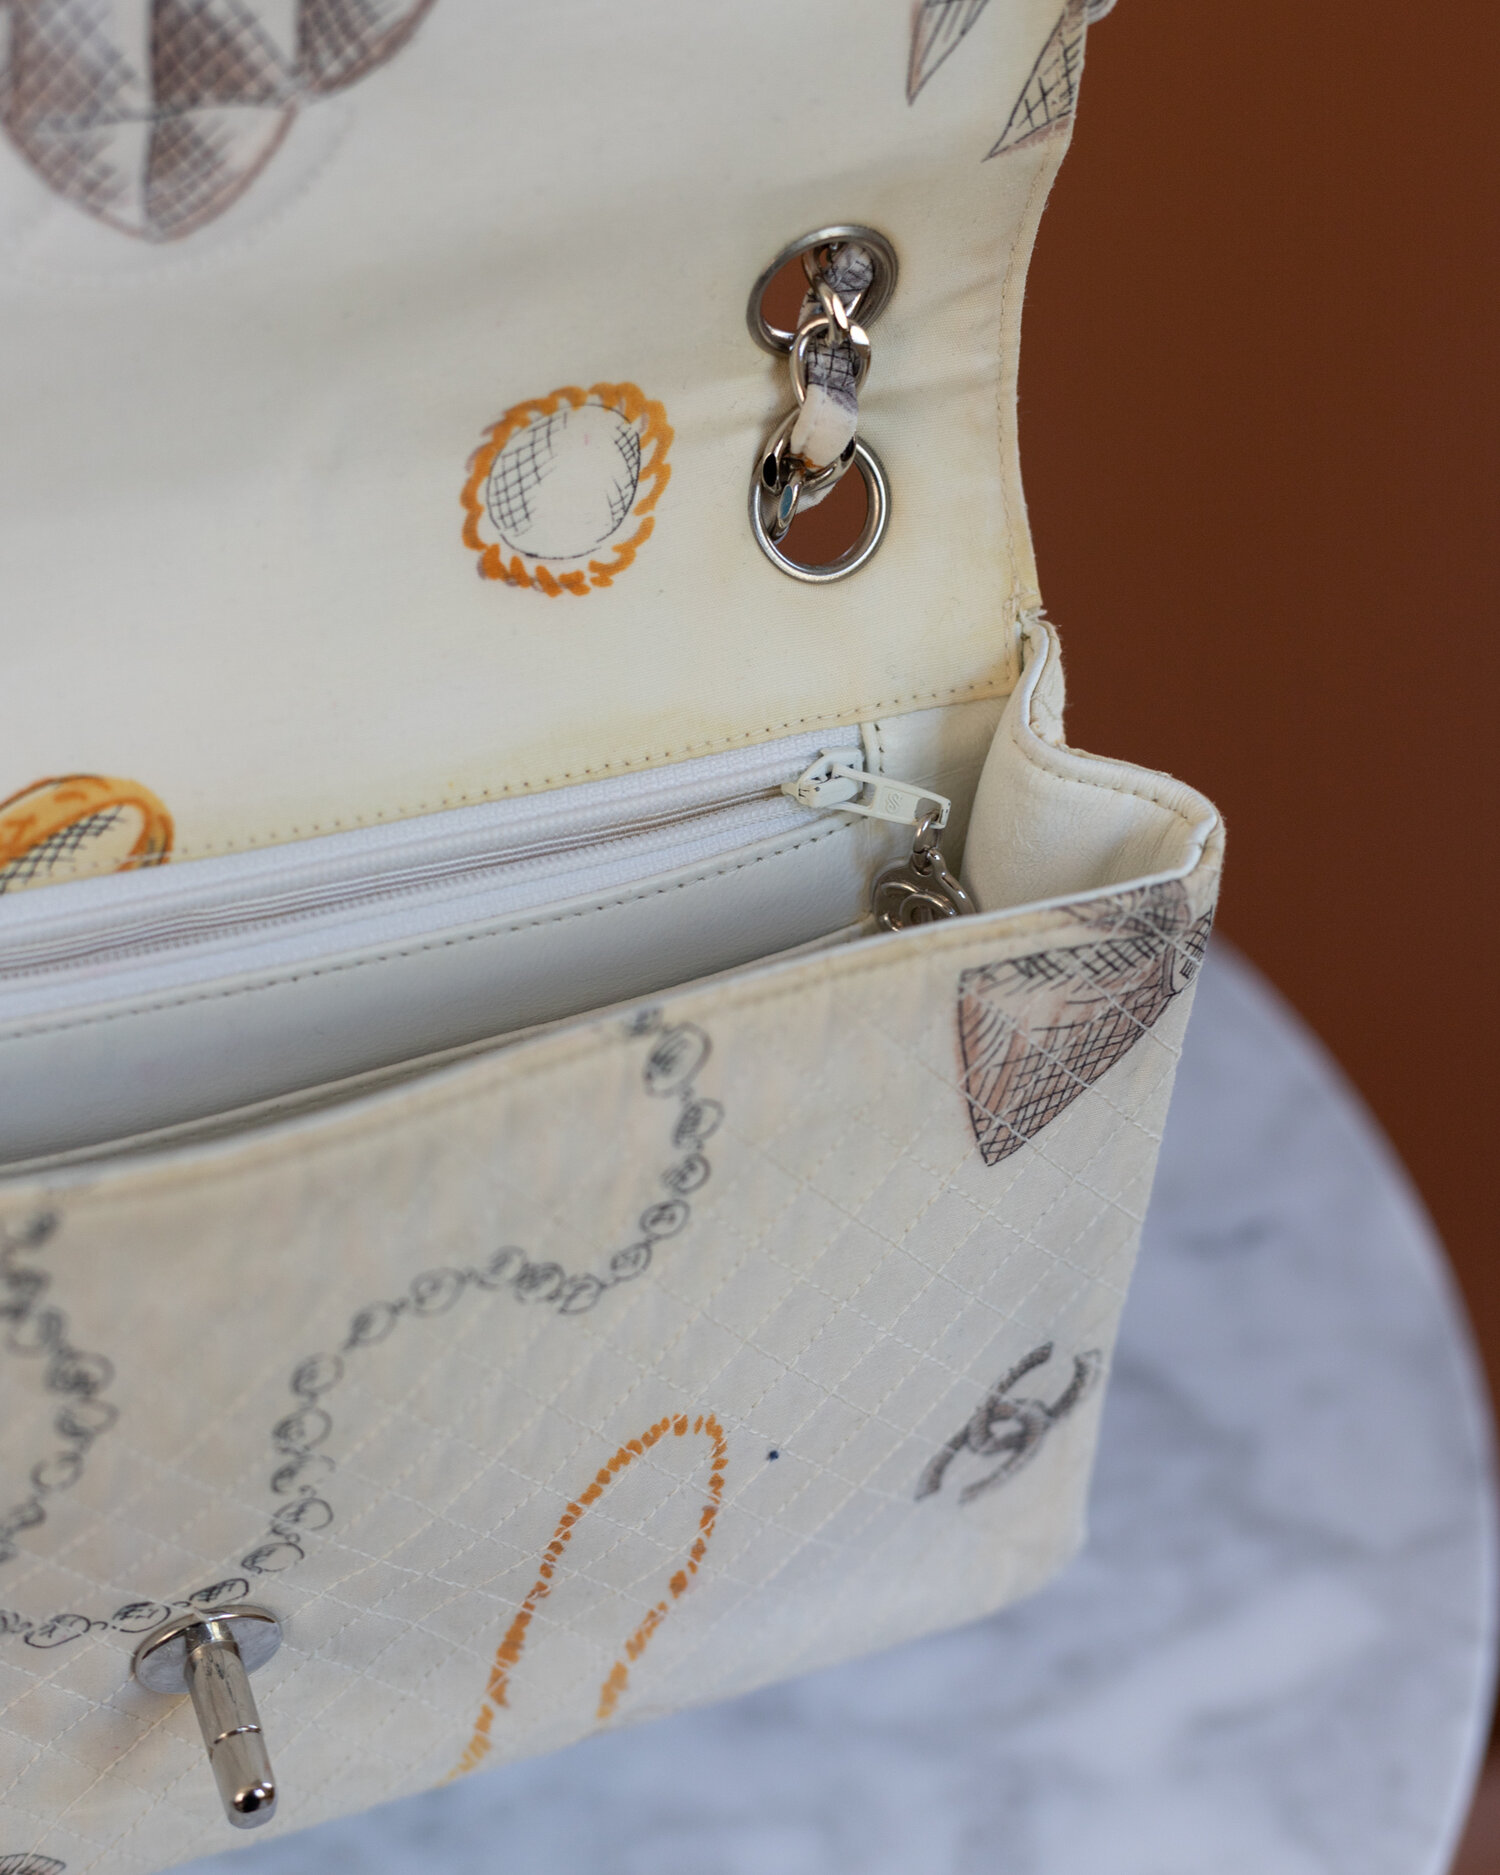 Vintage Chanel Classic Flap Bag in Printed White fabric — singulié